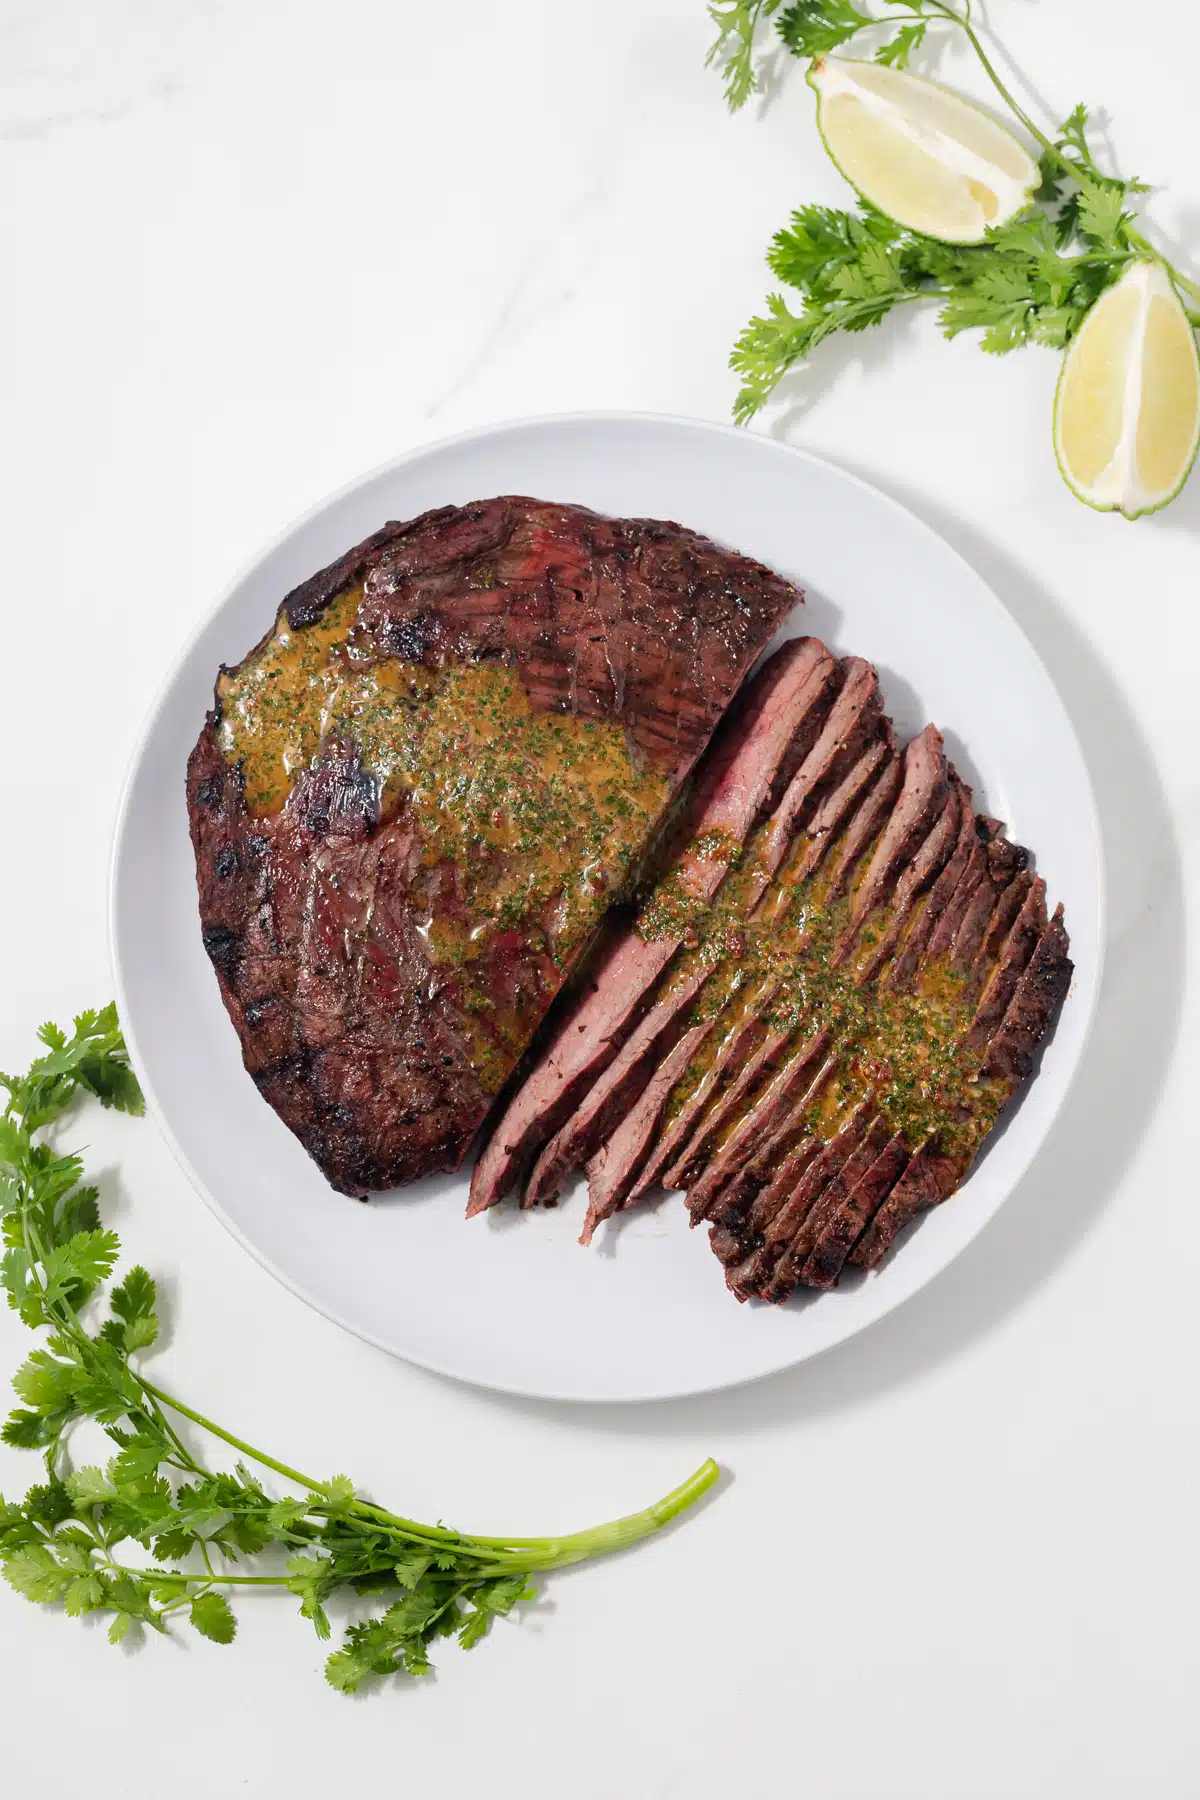 Steak cooked in carne asada marinade.